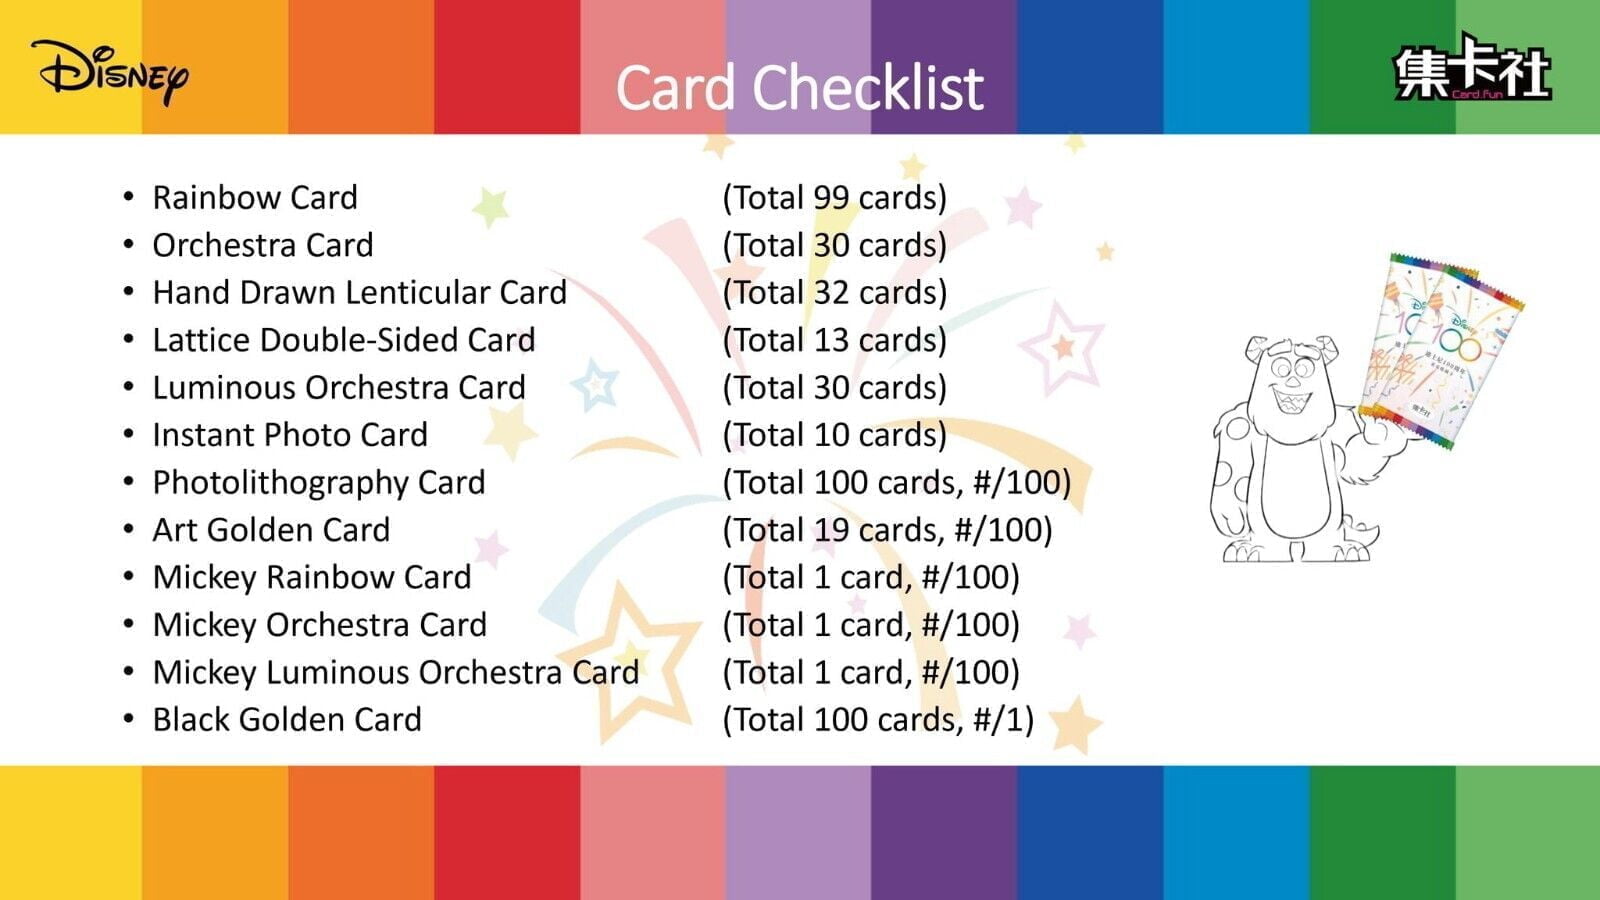 Disney 100 Joyful Trading Cards - Lattice Double-Sided Card